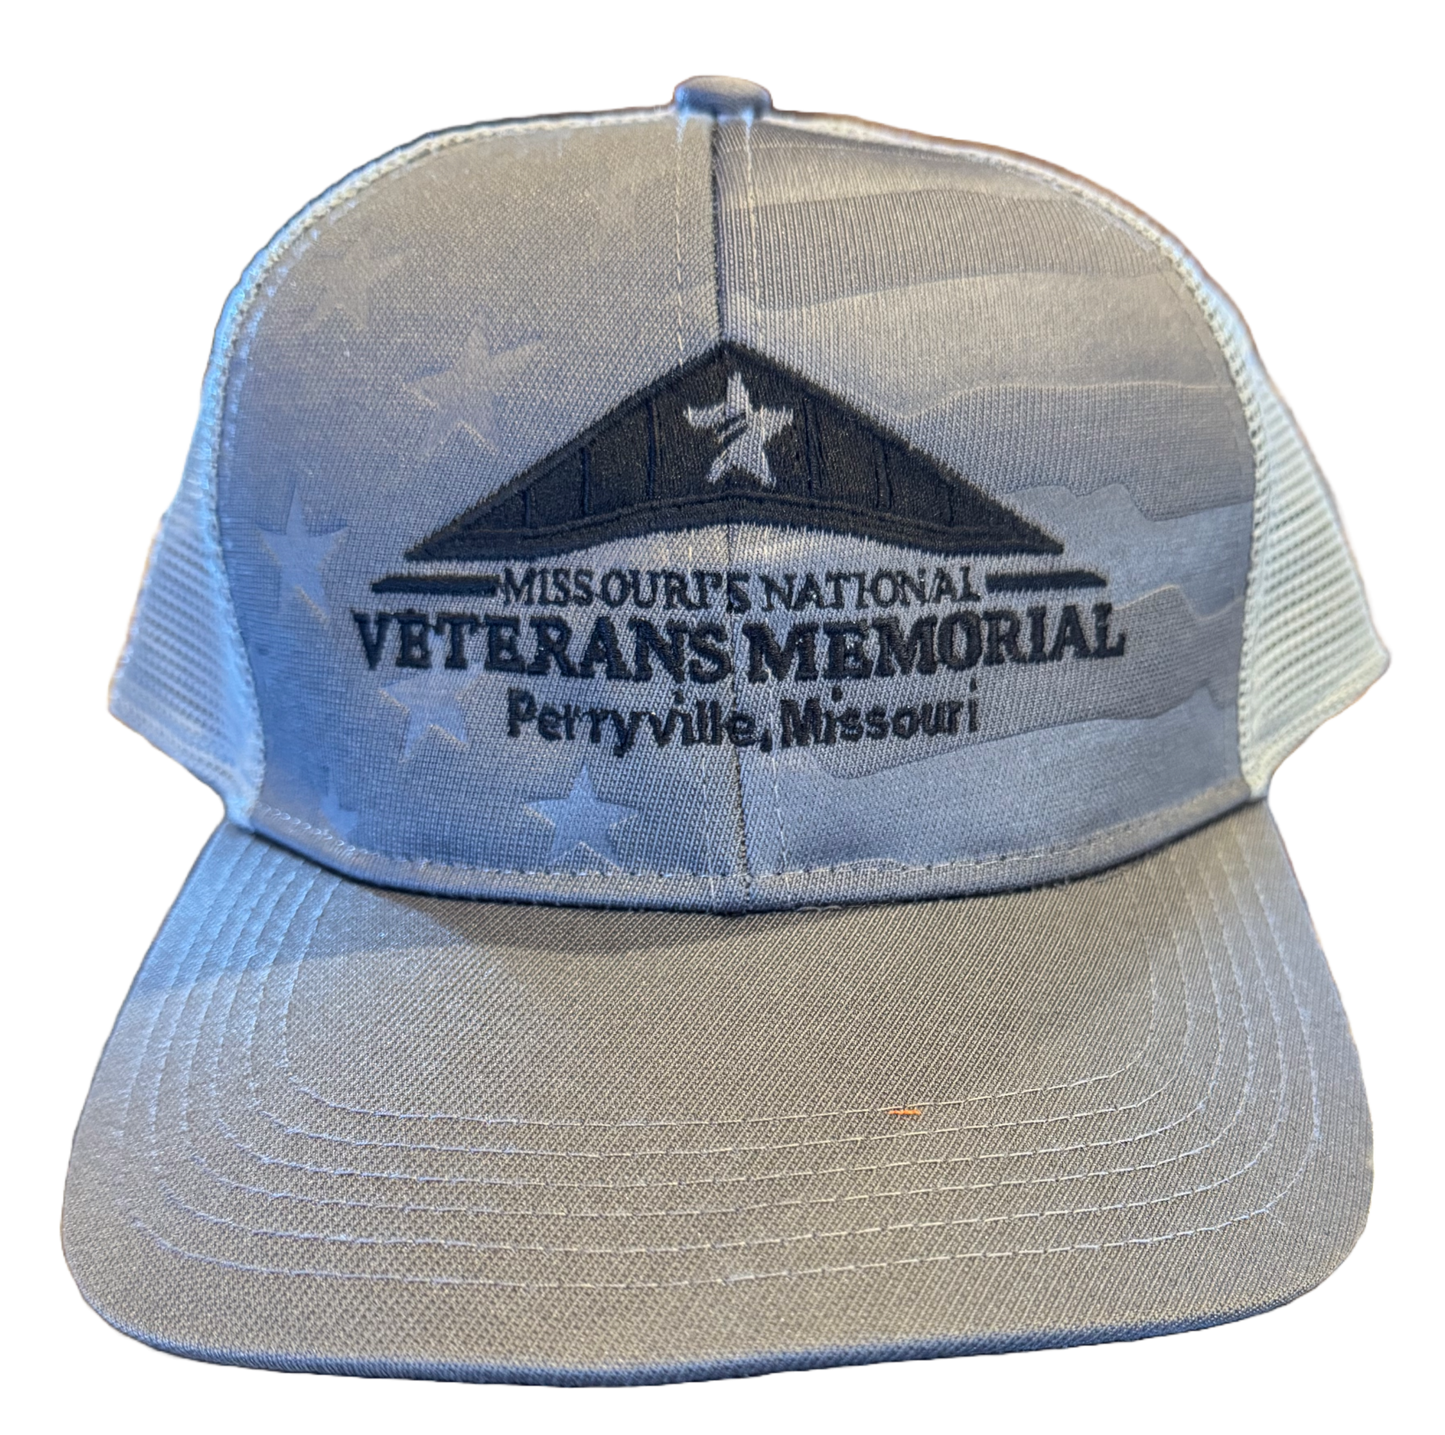 gray hat featuring Missouri's National Veterans Memorial Logo